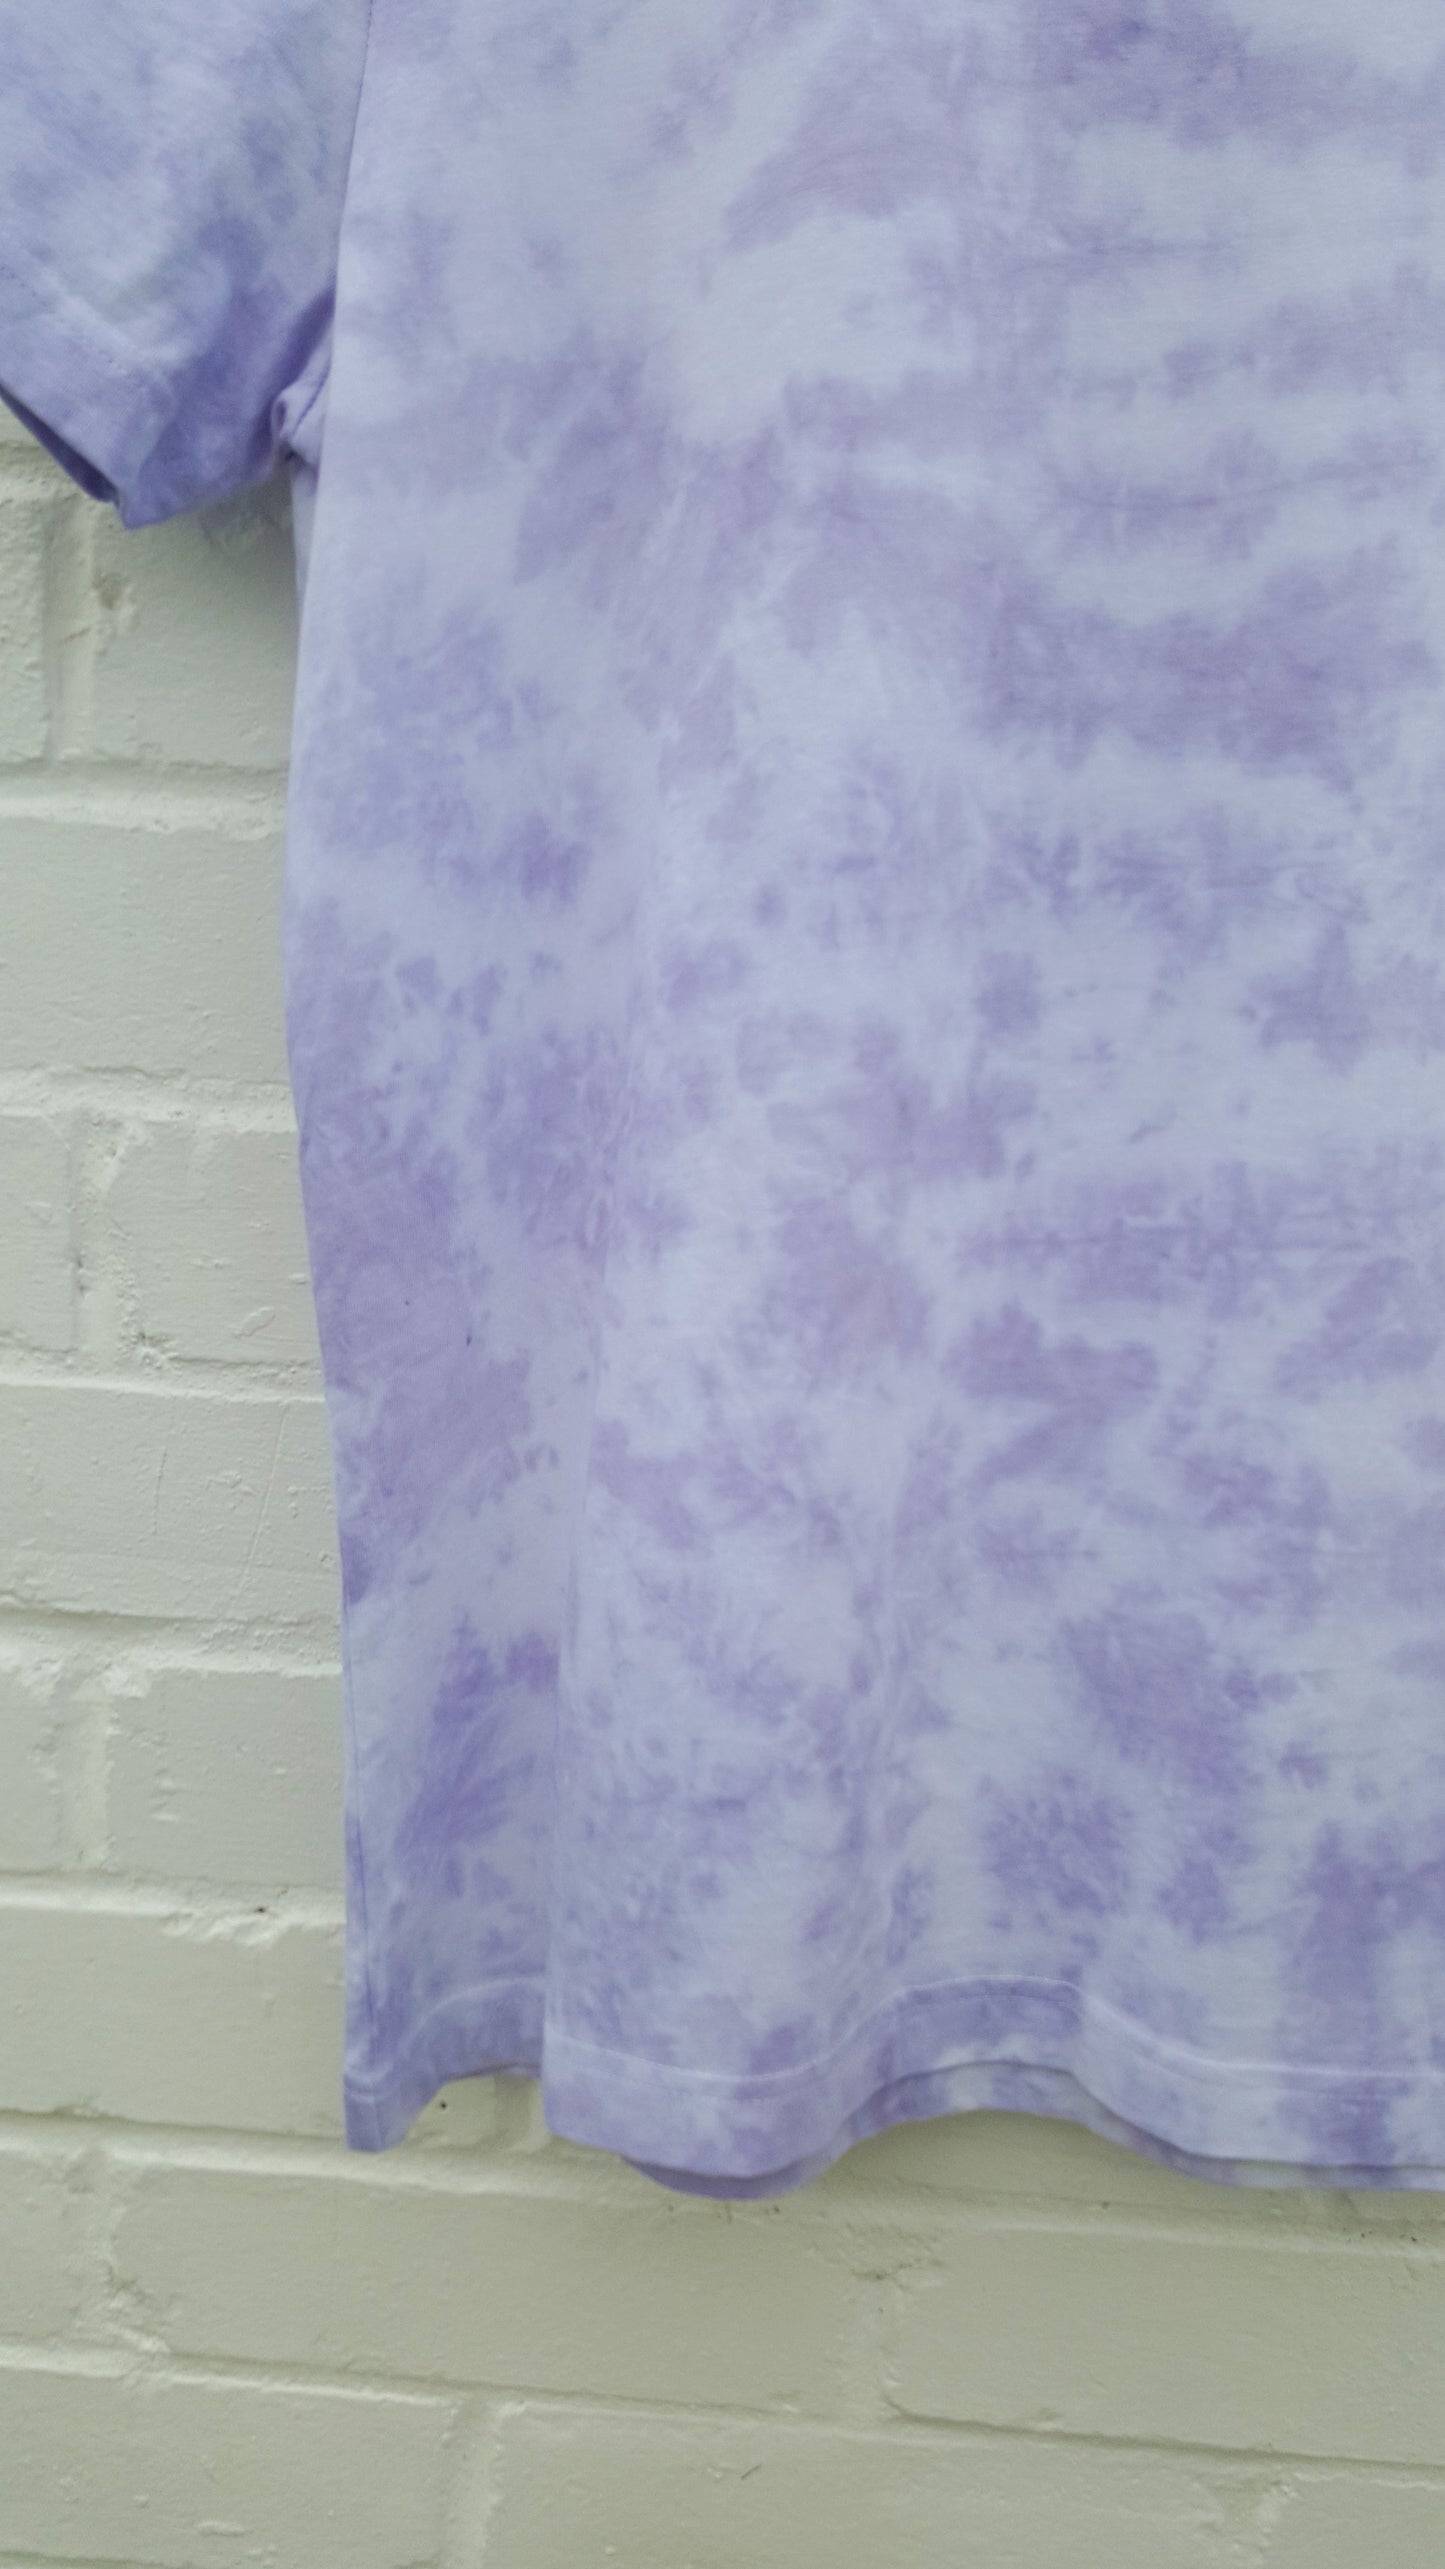 Lilac Ethical Men's T-shirt Tie Dye size S